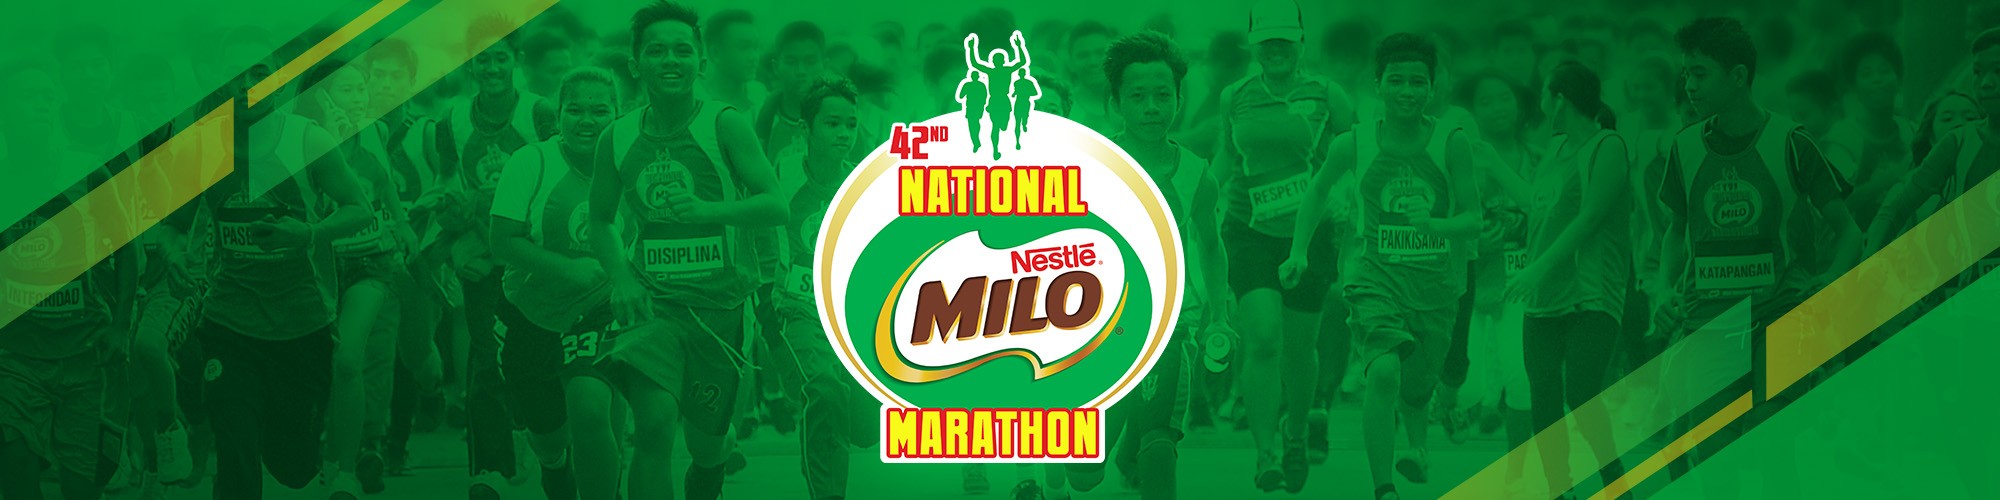 42nd National MILO Marathon - Cebu Leg